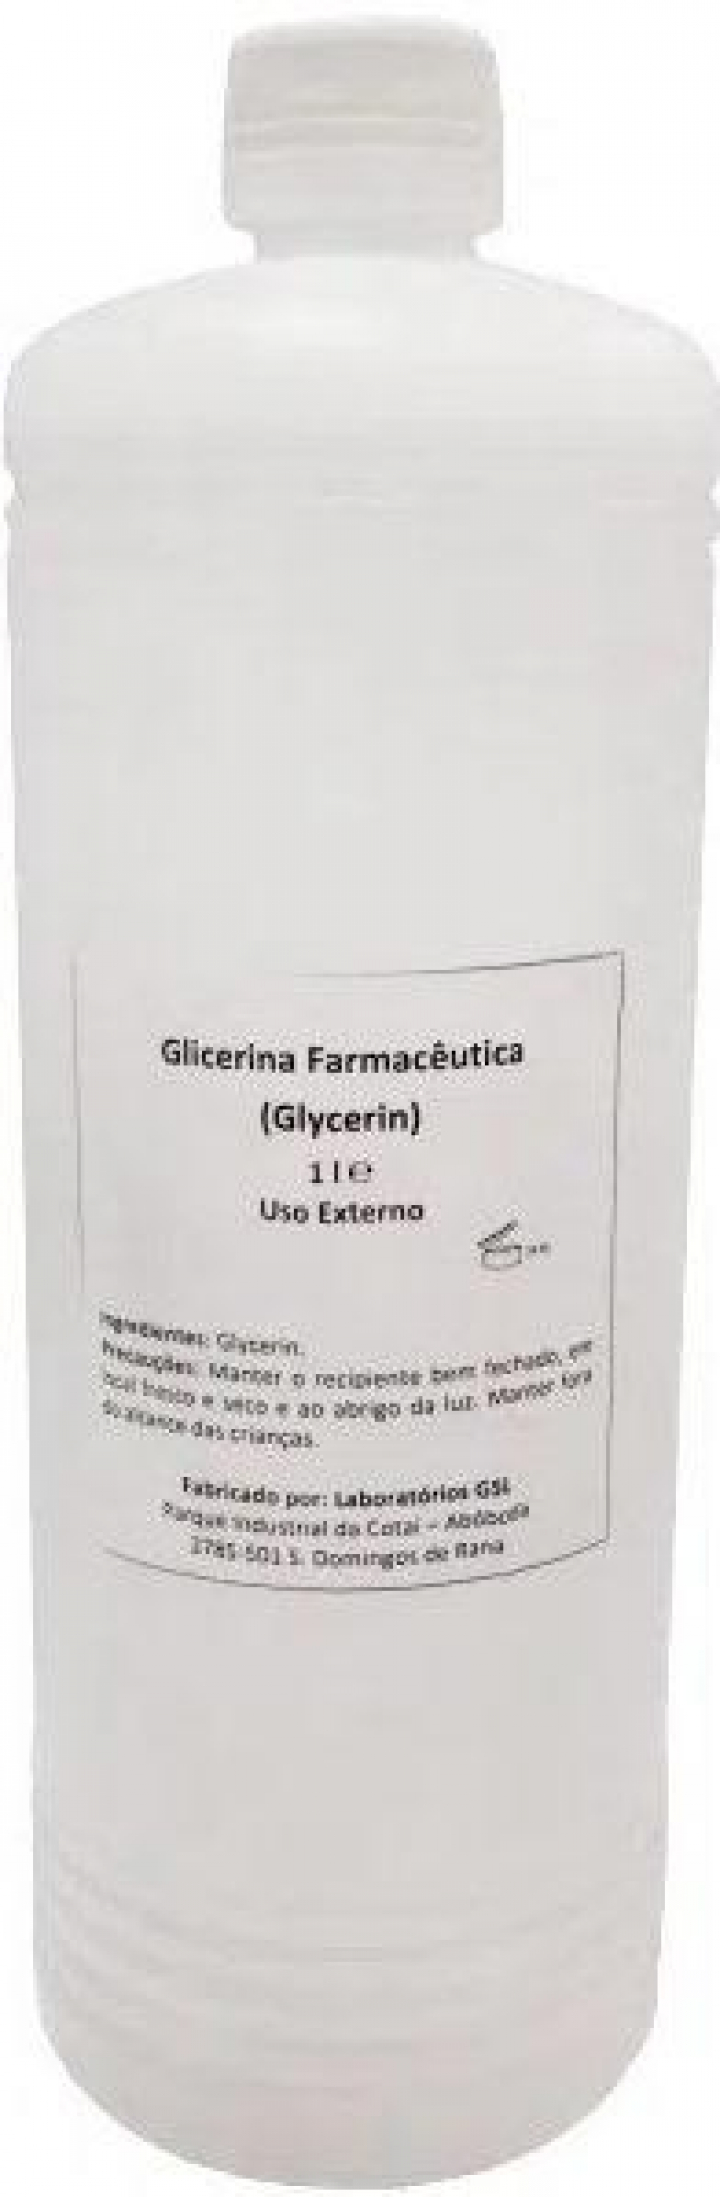 Glicerina farmacêutica 1Lt